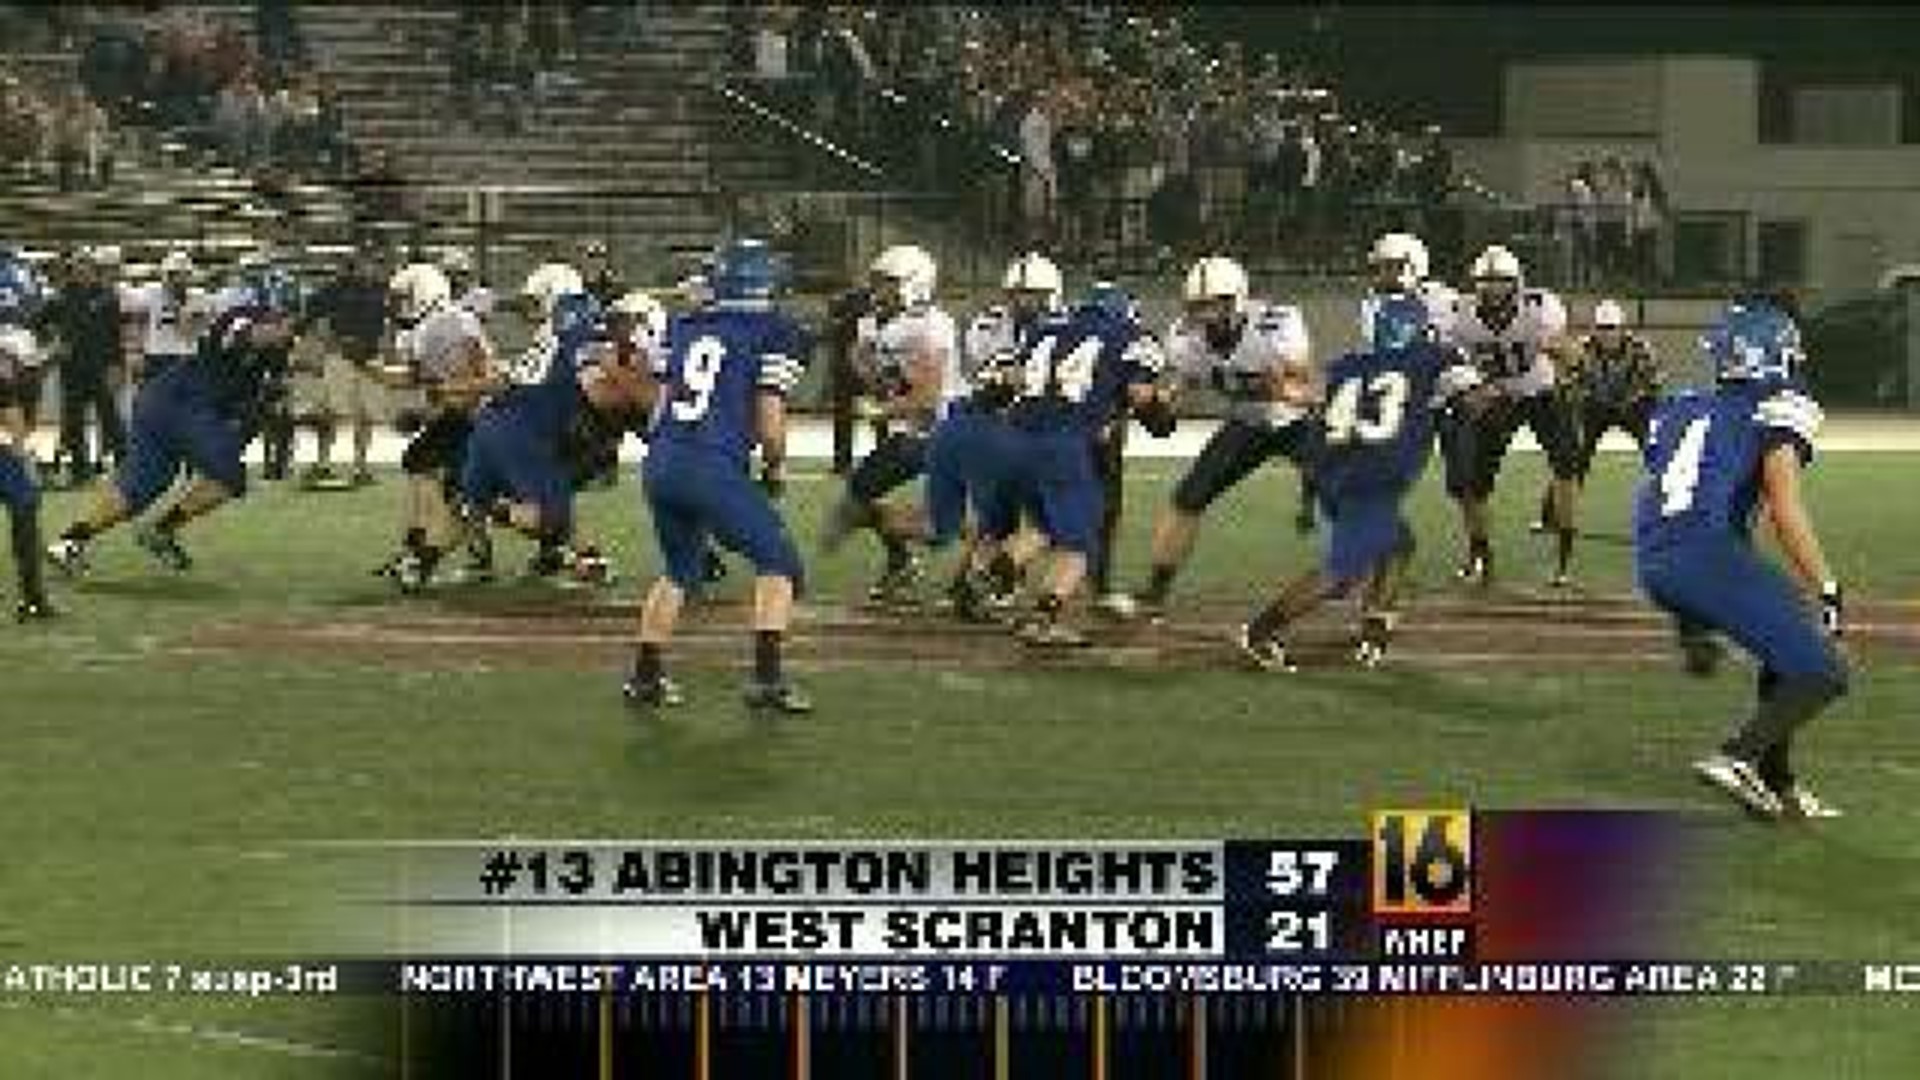 Abington Heights vs. West Scranton